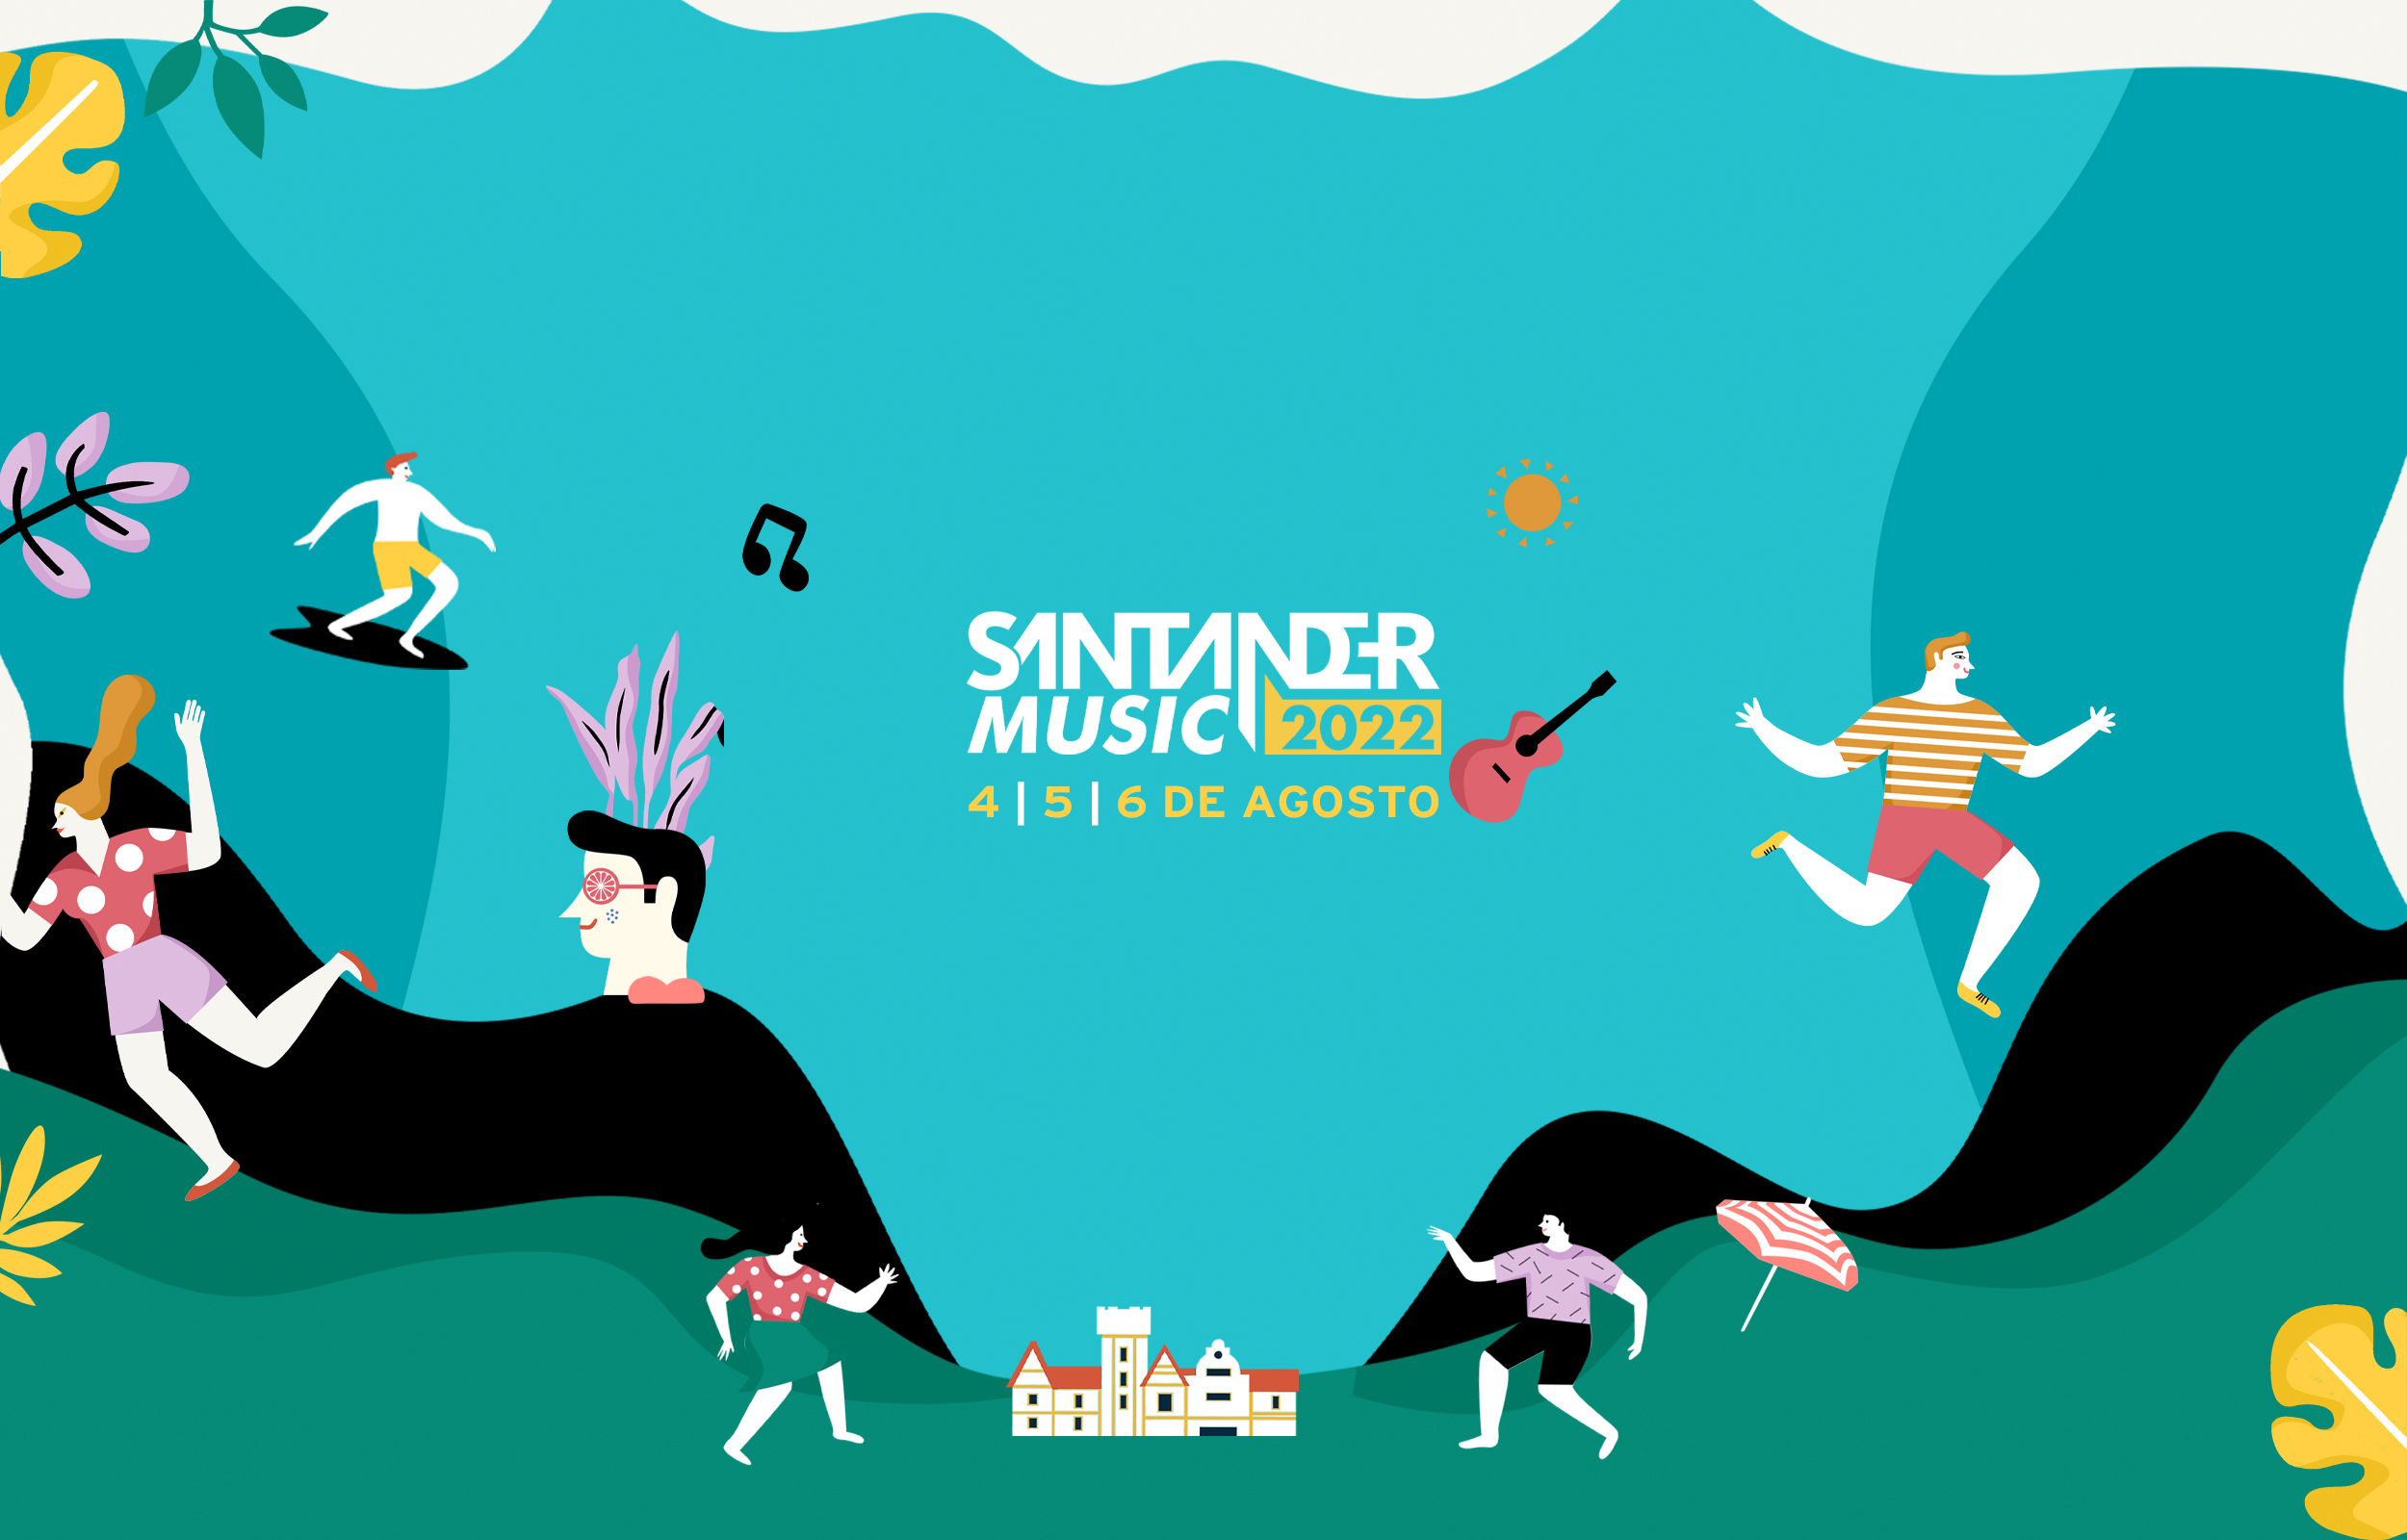 santander_music_2022